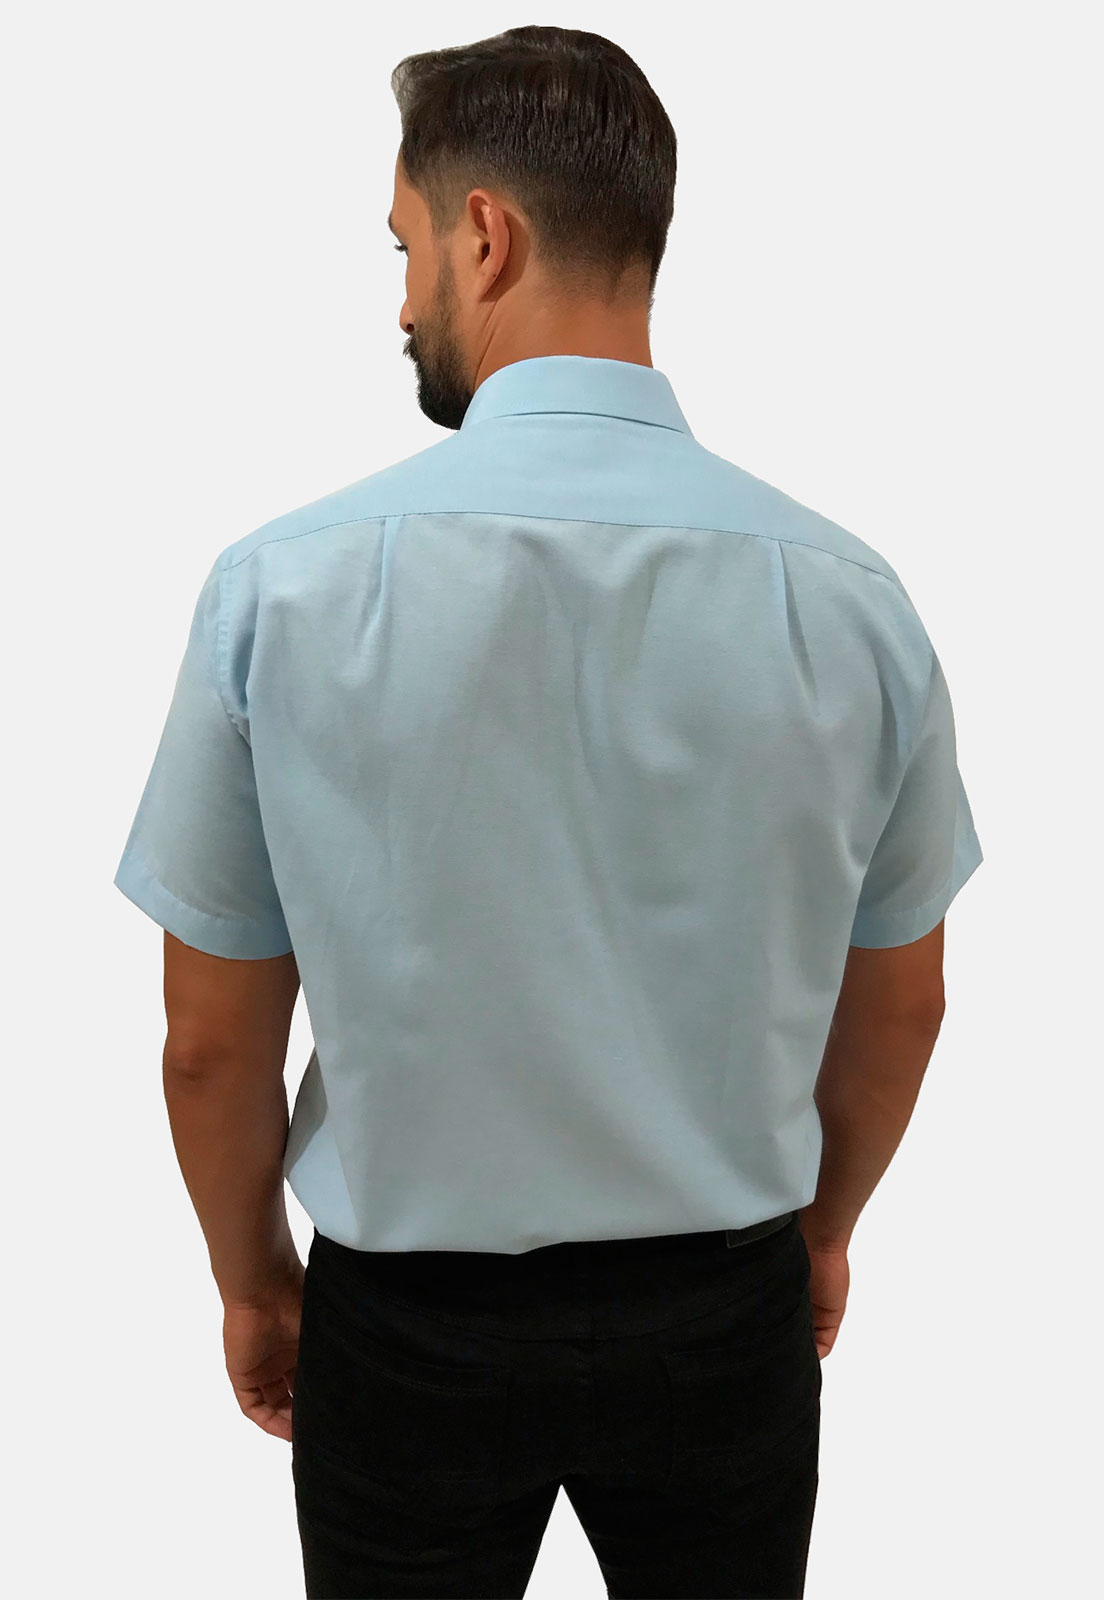 Camisa Social Masculina Olimpo Lisa com Bolso Manga Curta 6 cores